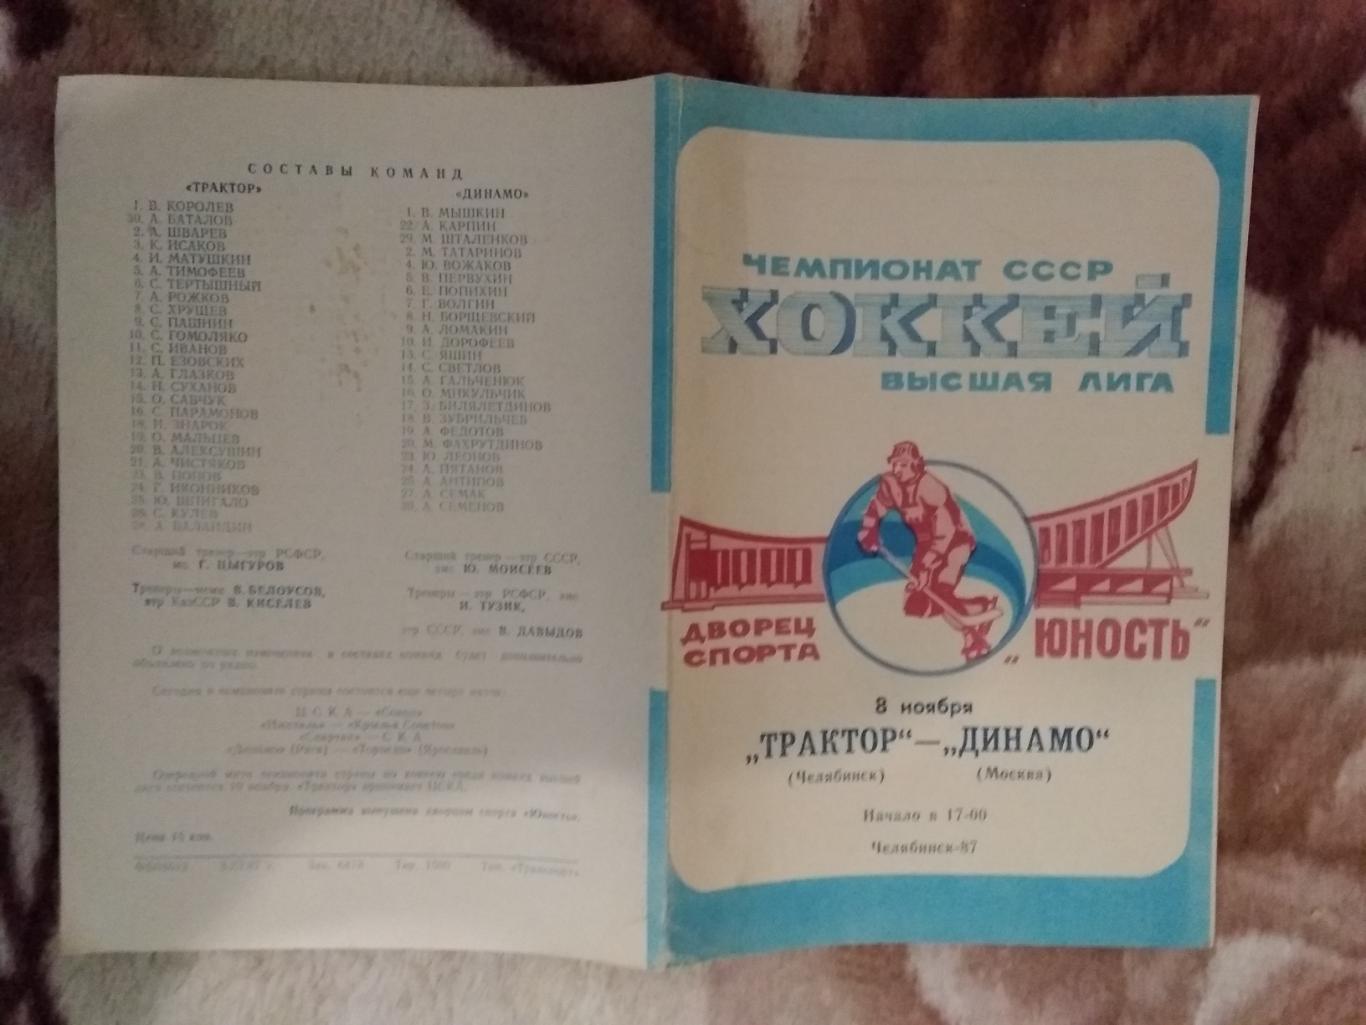 Трактор (Челябинск) - Динамо (Москва) 08.11.1987 г.